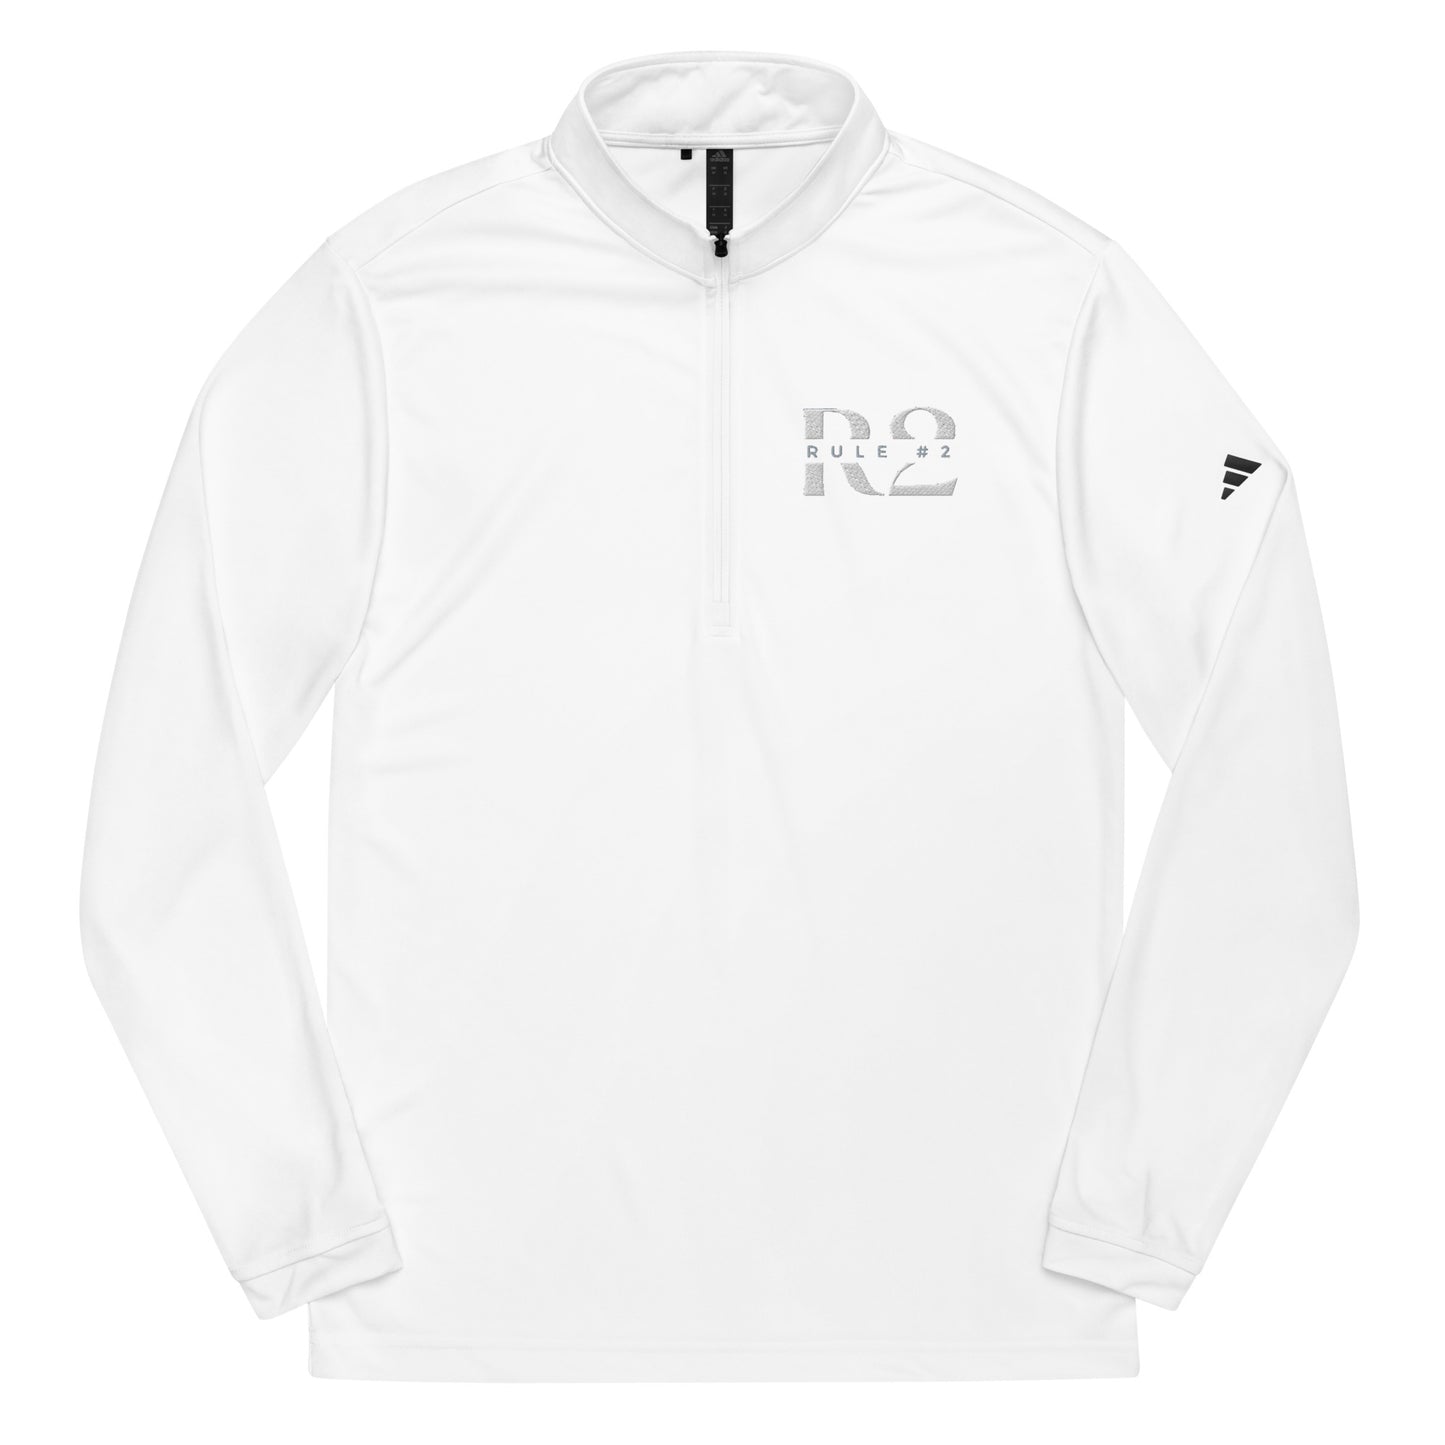 R2 Grey Logo Quarter zip pullover